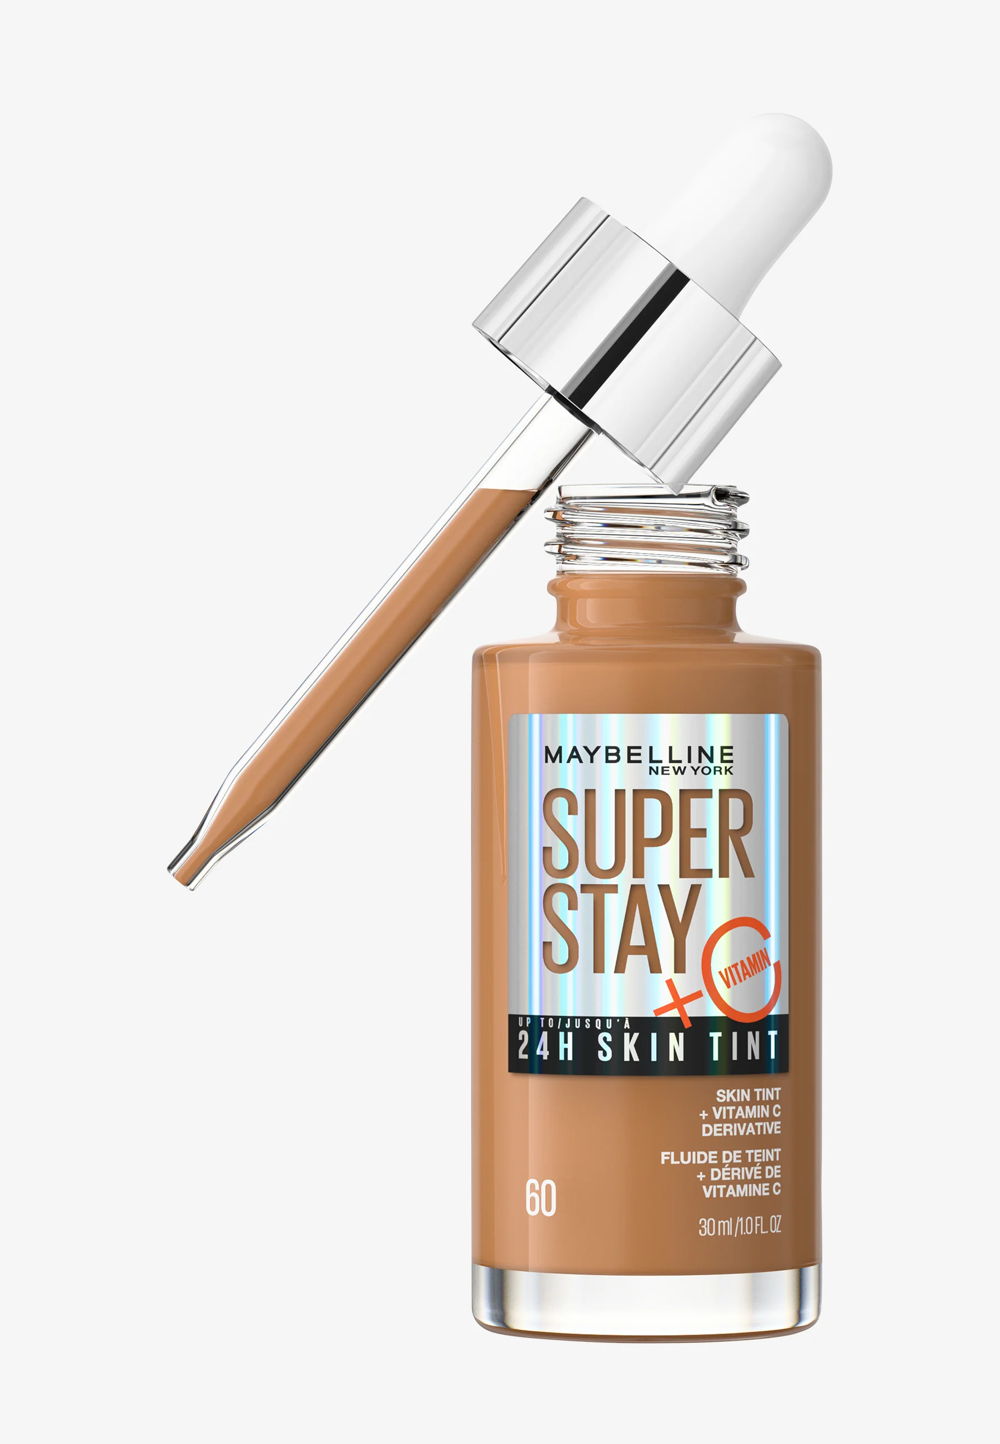 Super Stay 24H Skin Tint